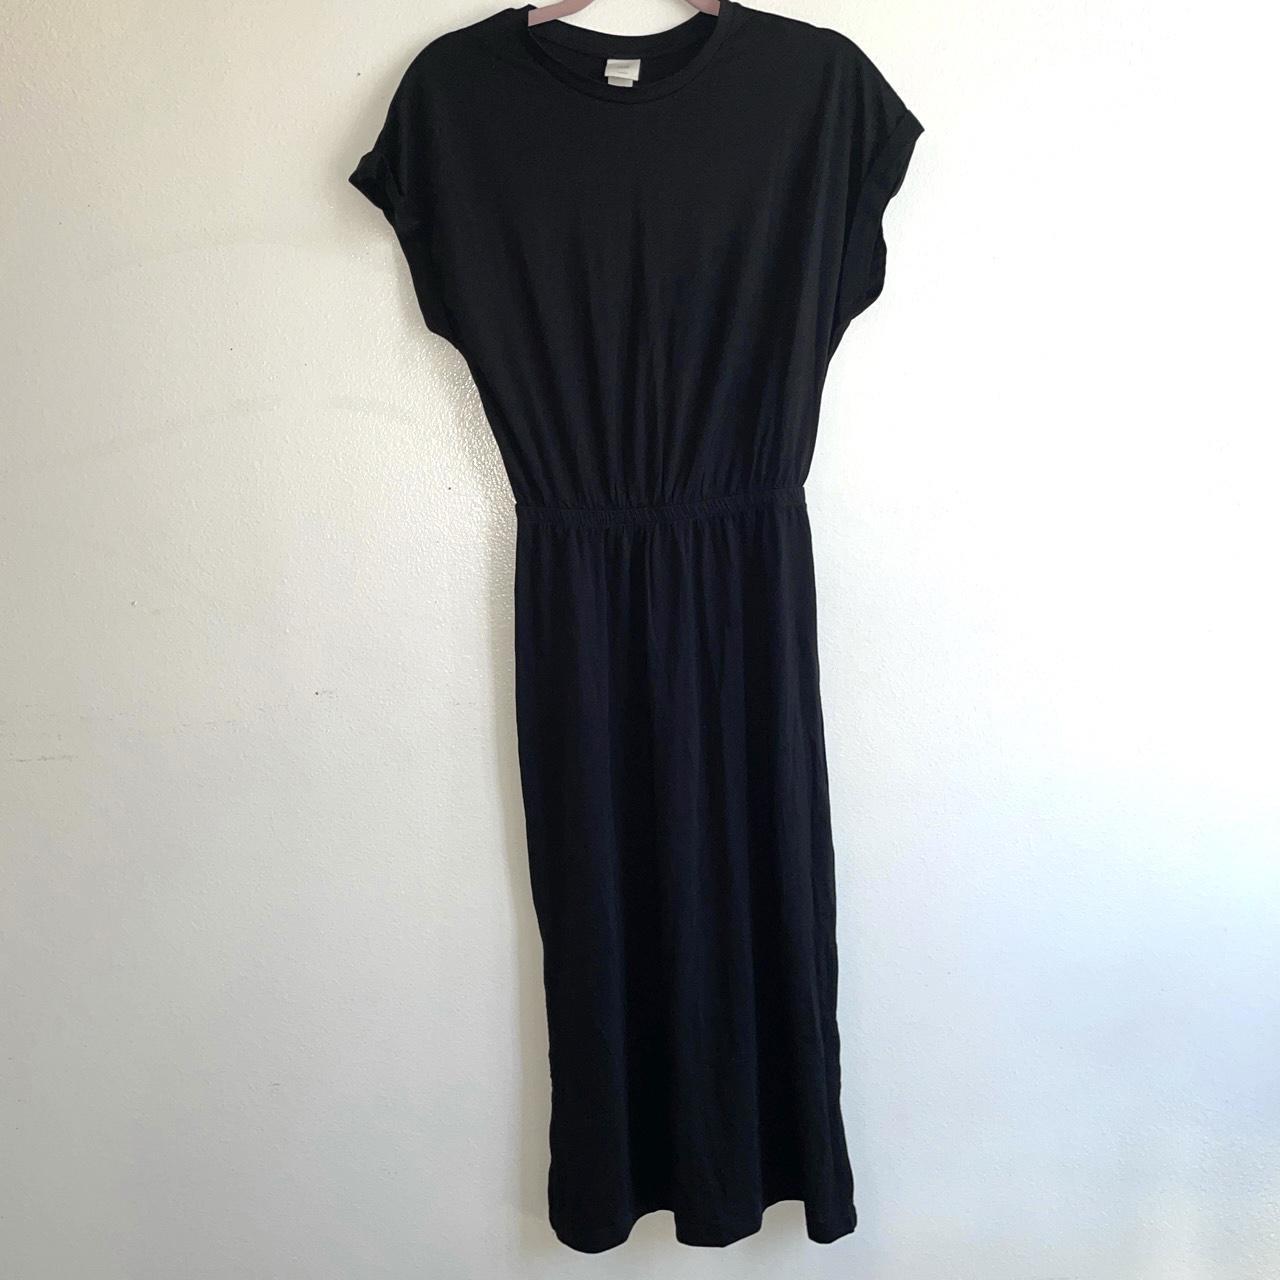 Simple Casual Black Dress from H&M Short Sleeve... - Depop